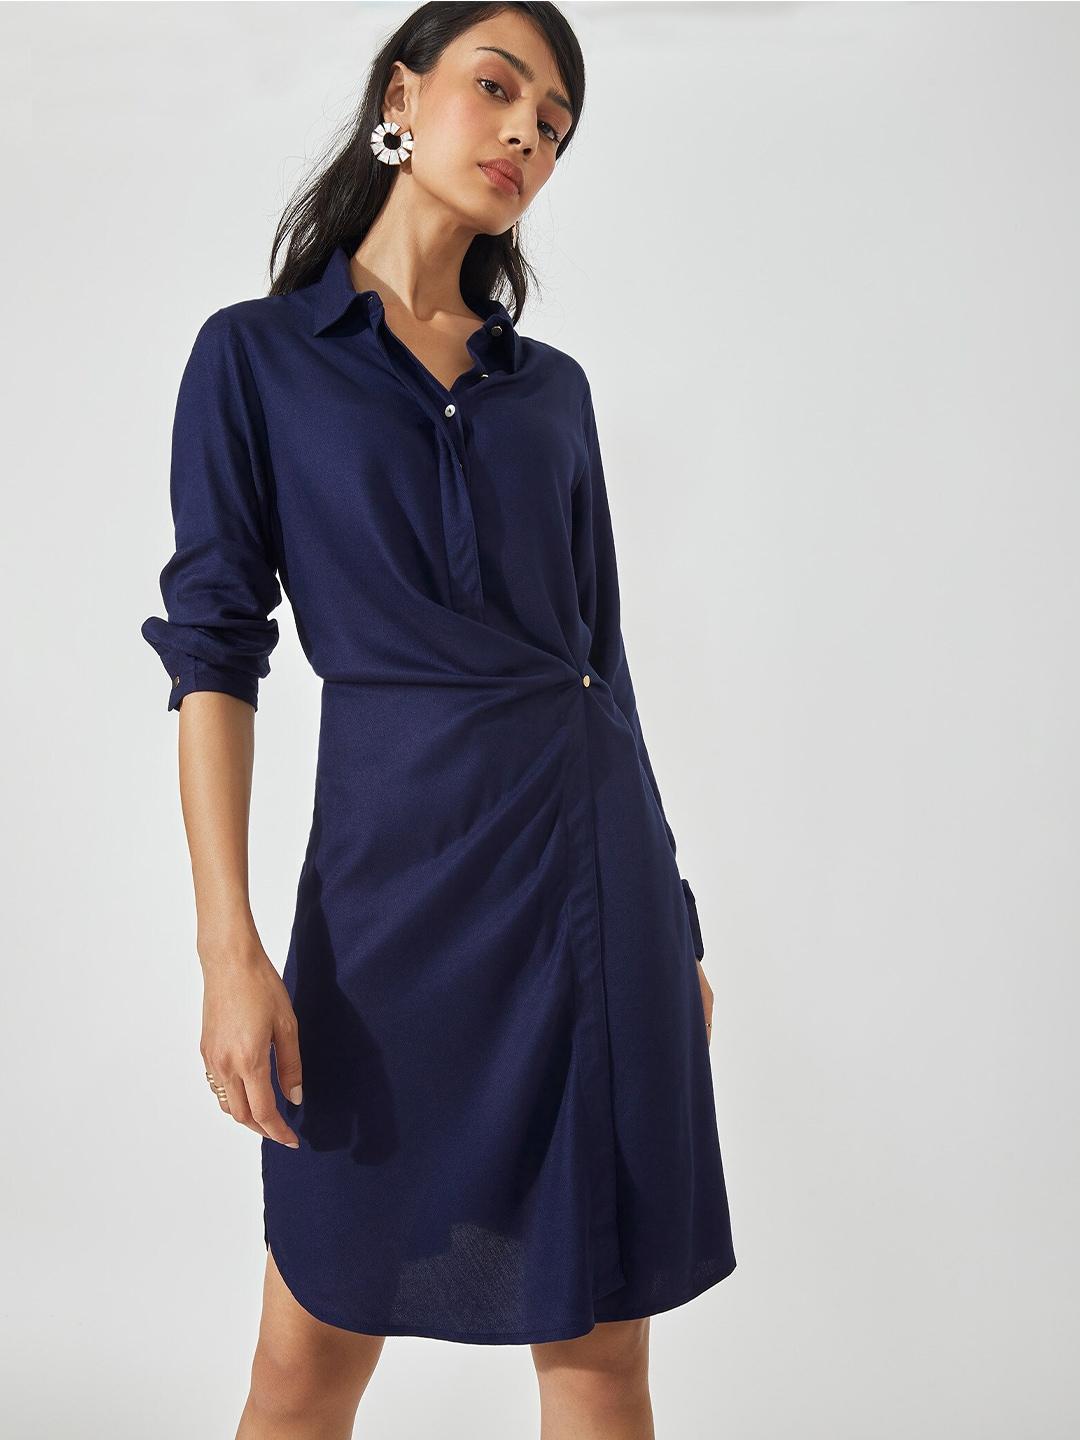 the-label-life-women-navy-blue-wrap-shirt-dress